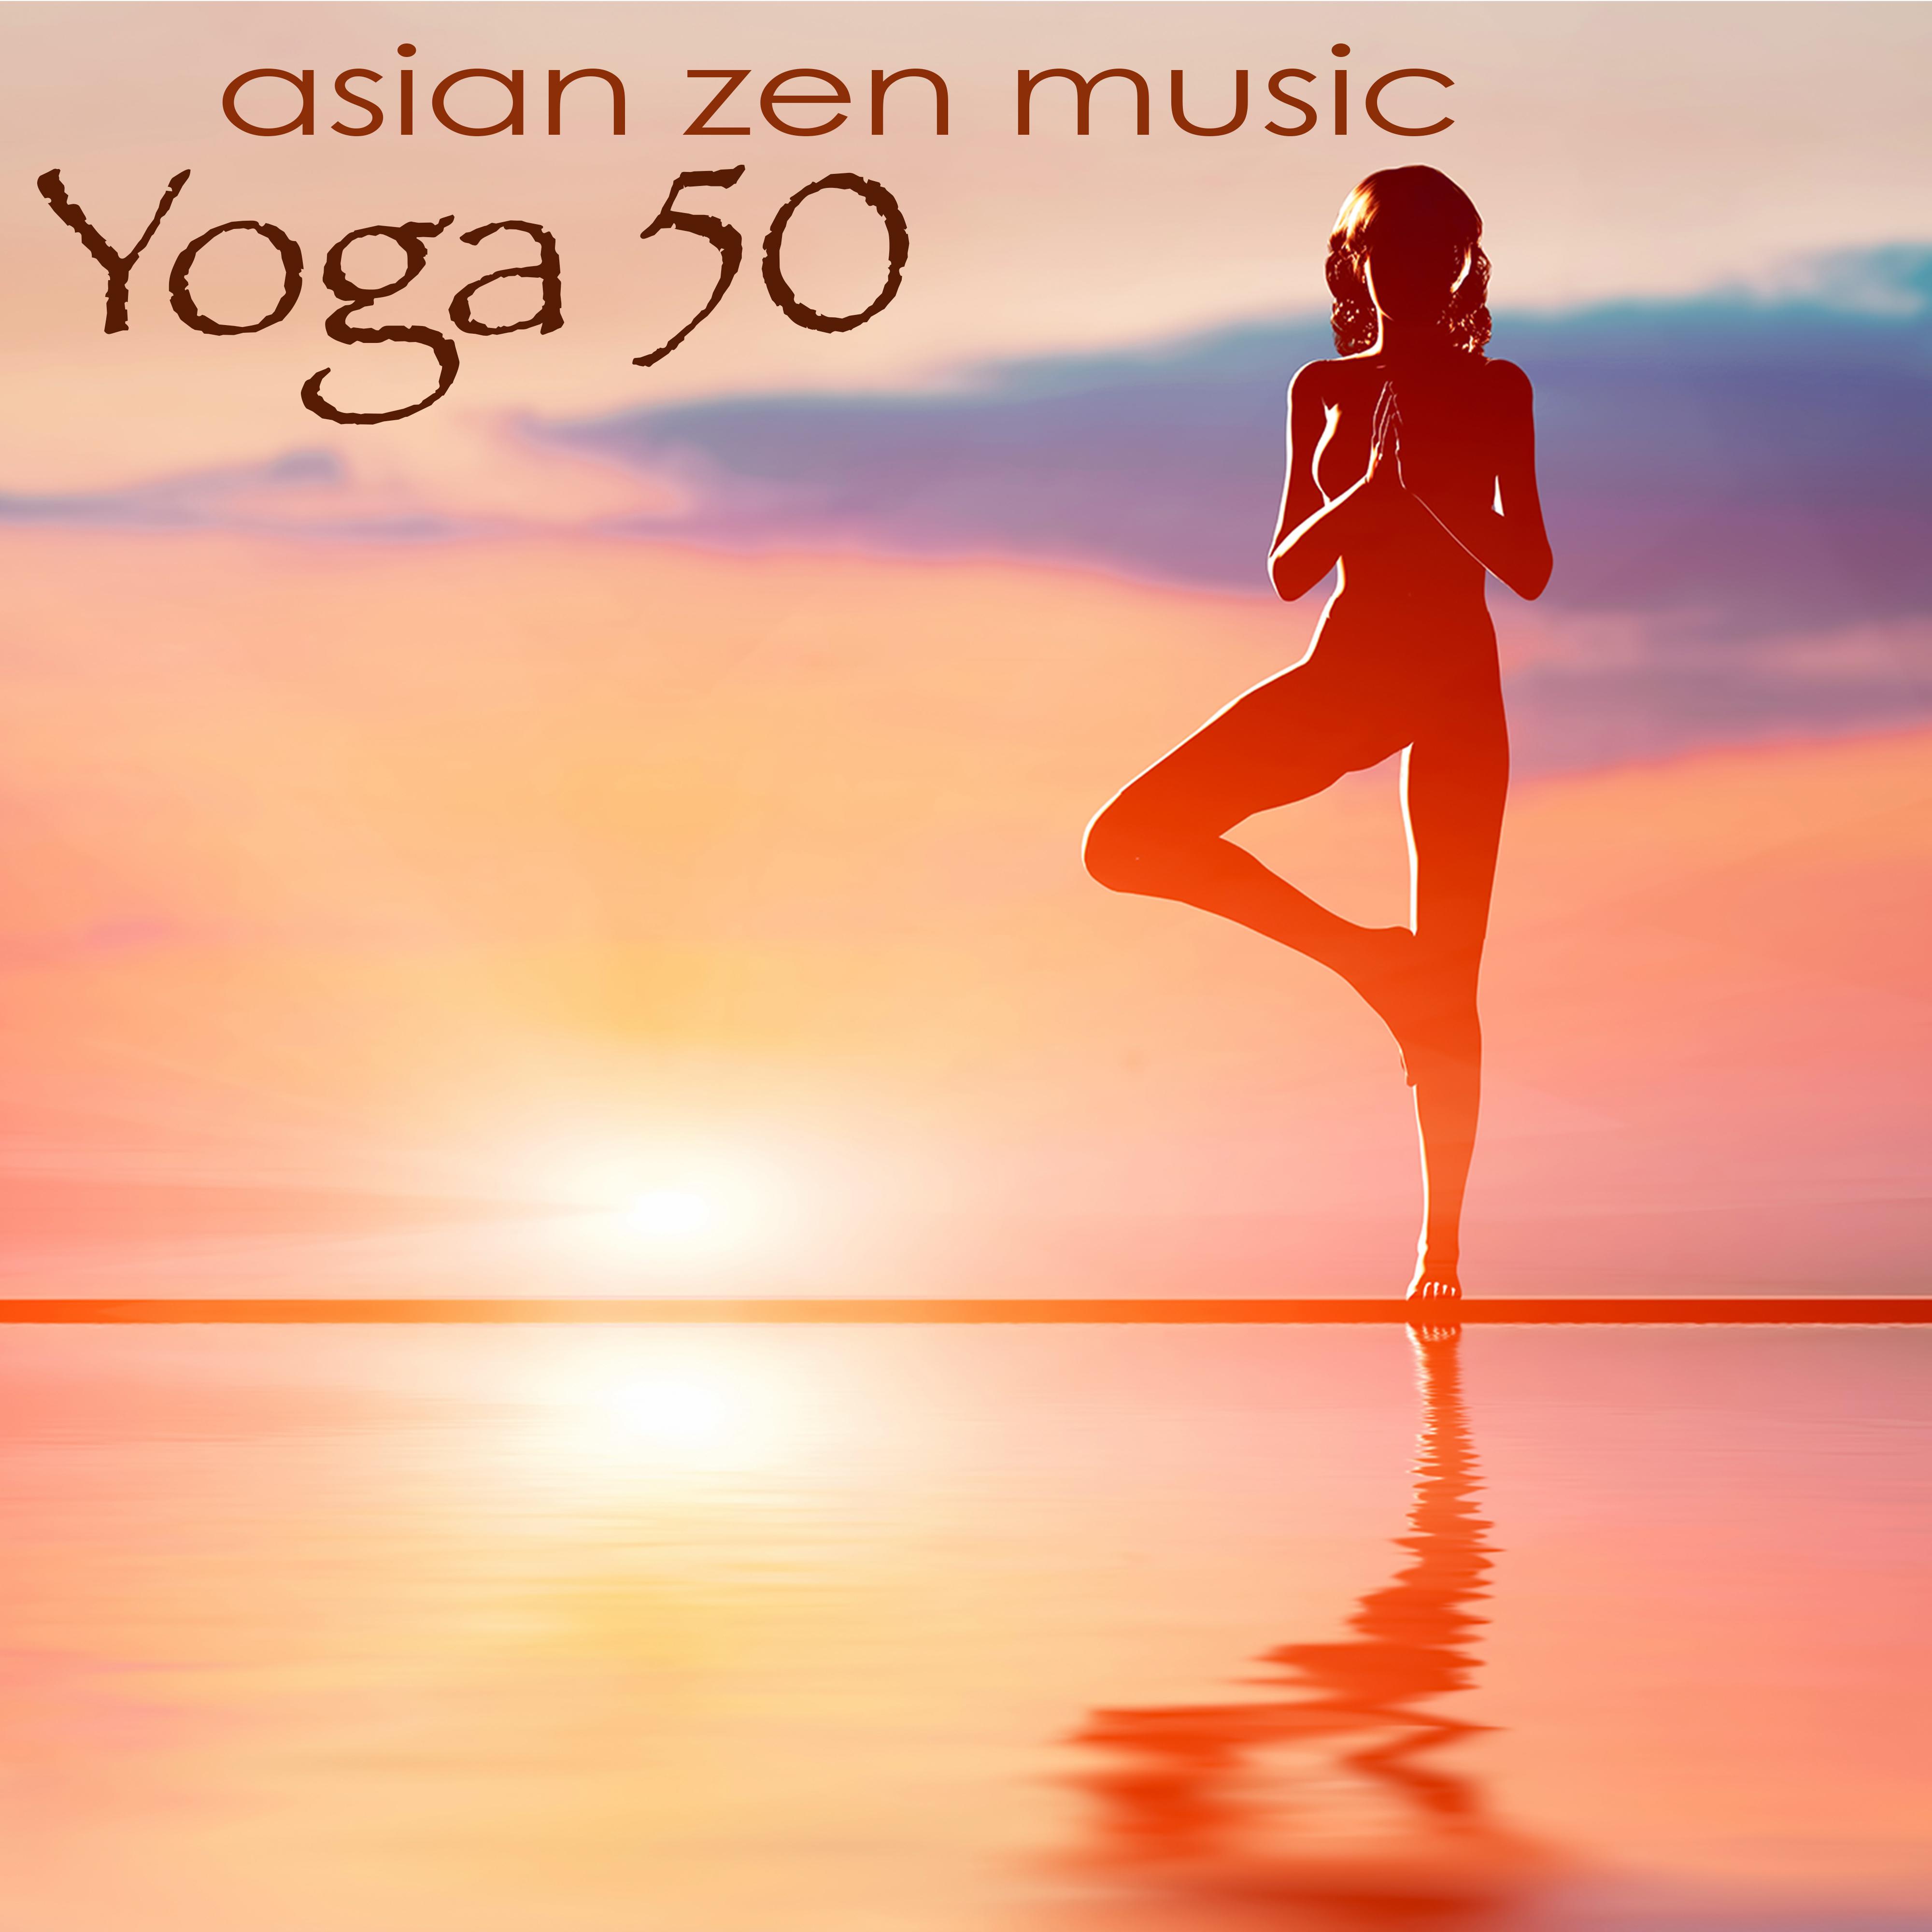 Yoga 50 Asian Zen Music  Ambient  Chillout for Meditation, Pranayama, Ashtanga, Vinyasa, Hatha  Restorative Yoga